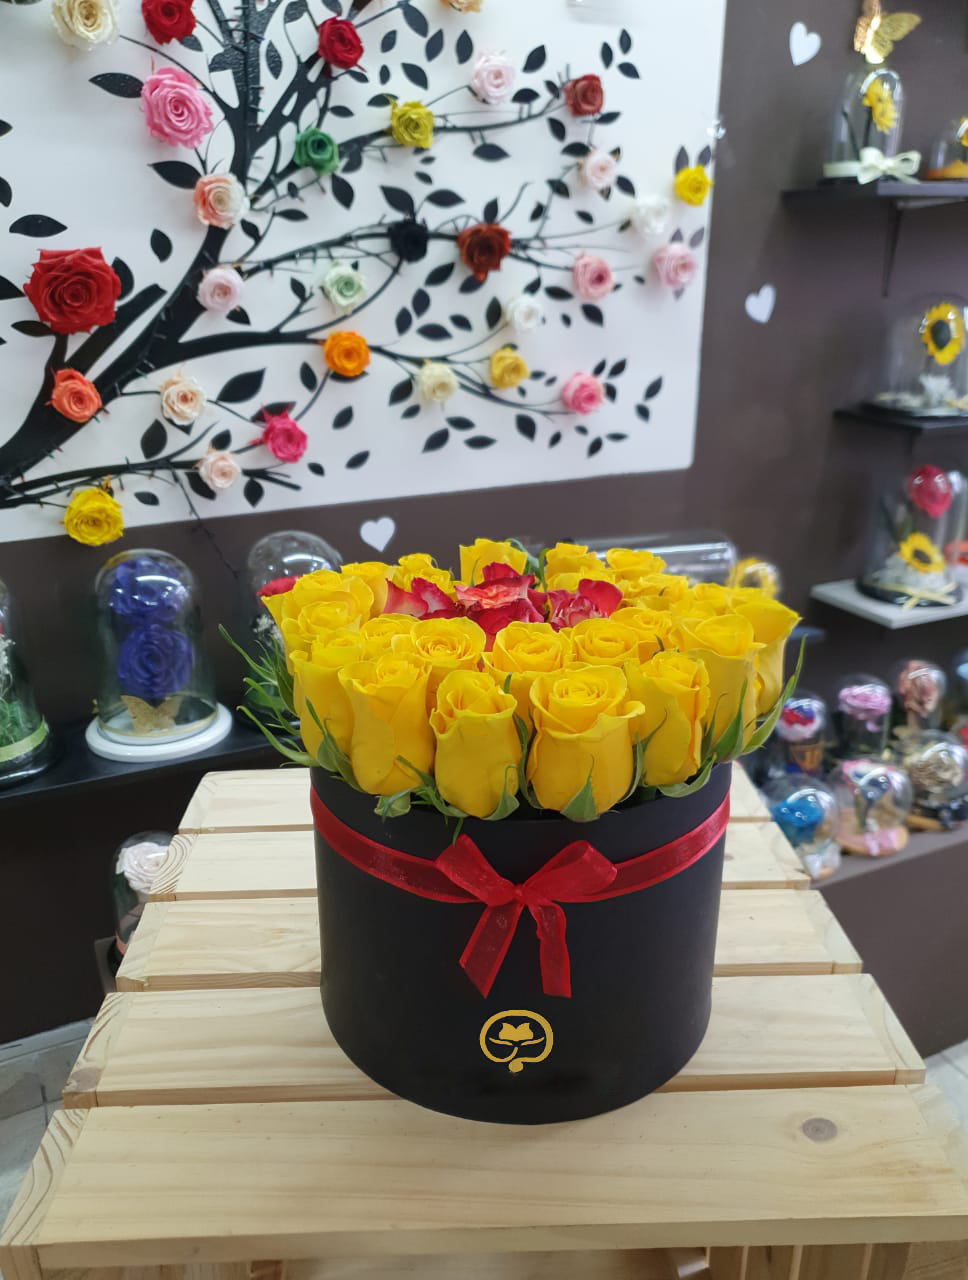 Two Dozen Roses in a Round Box - Yellow